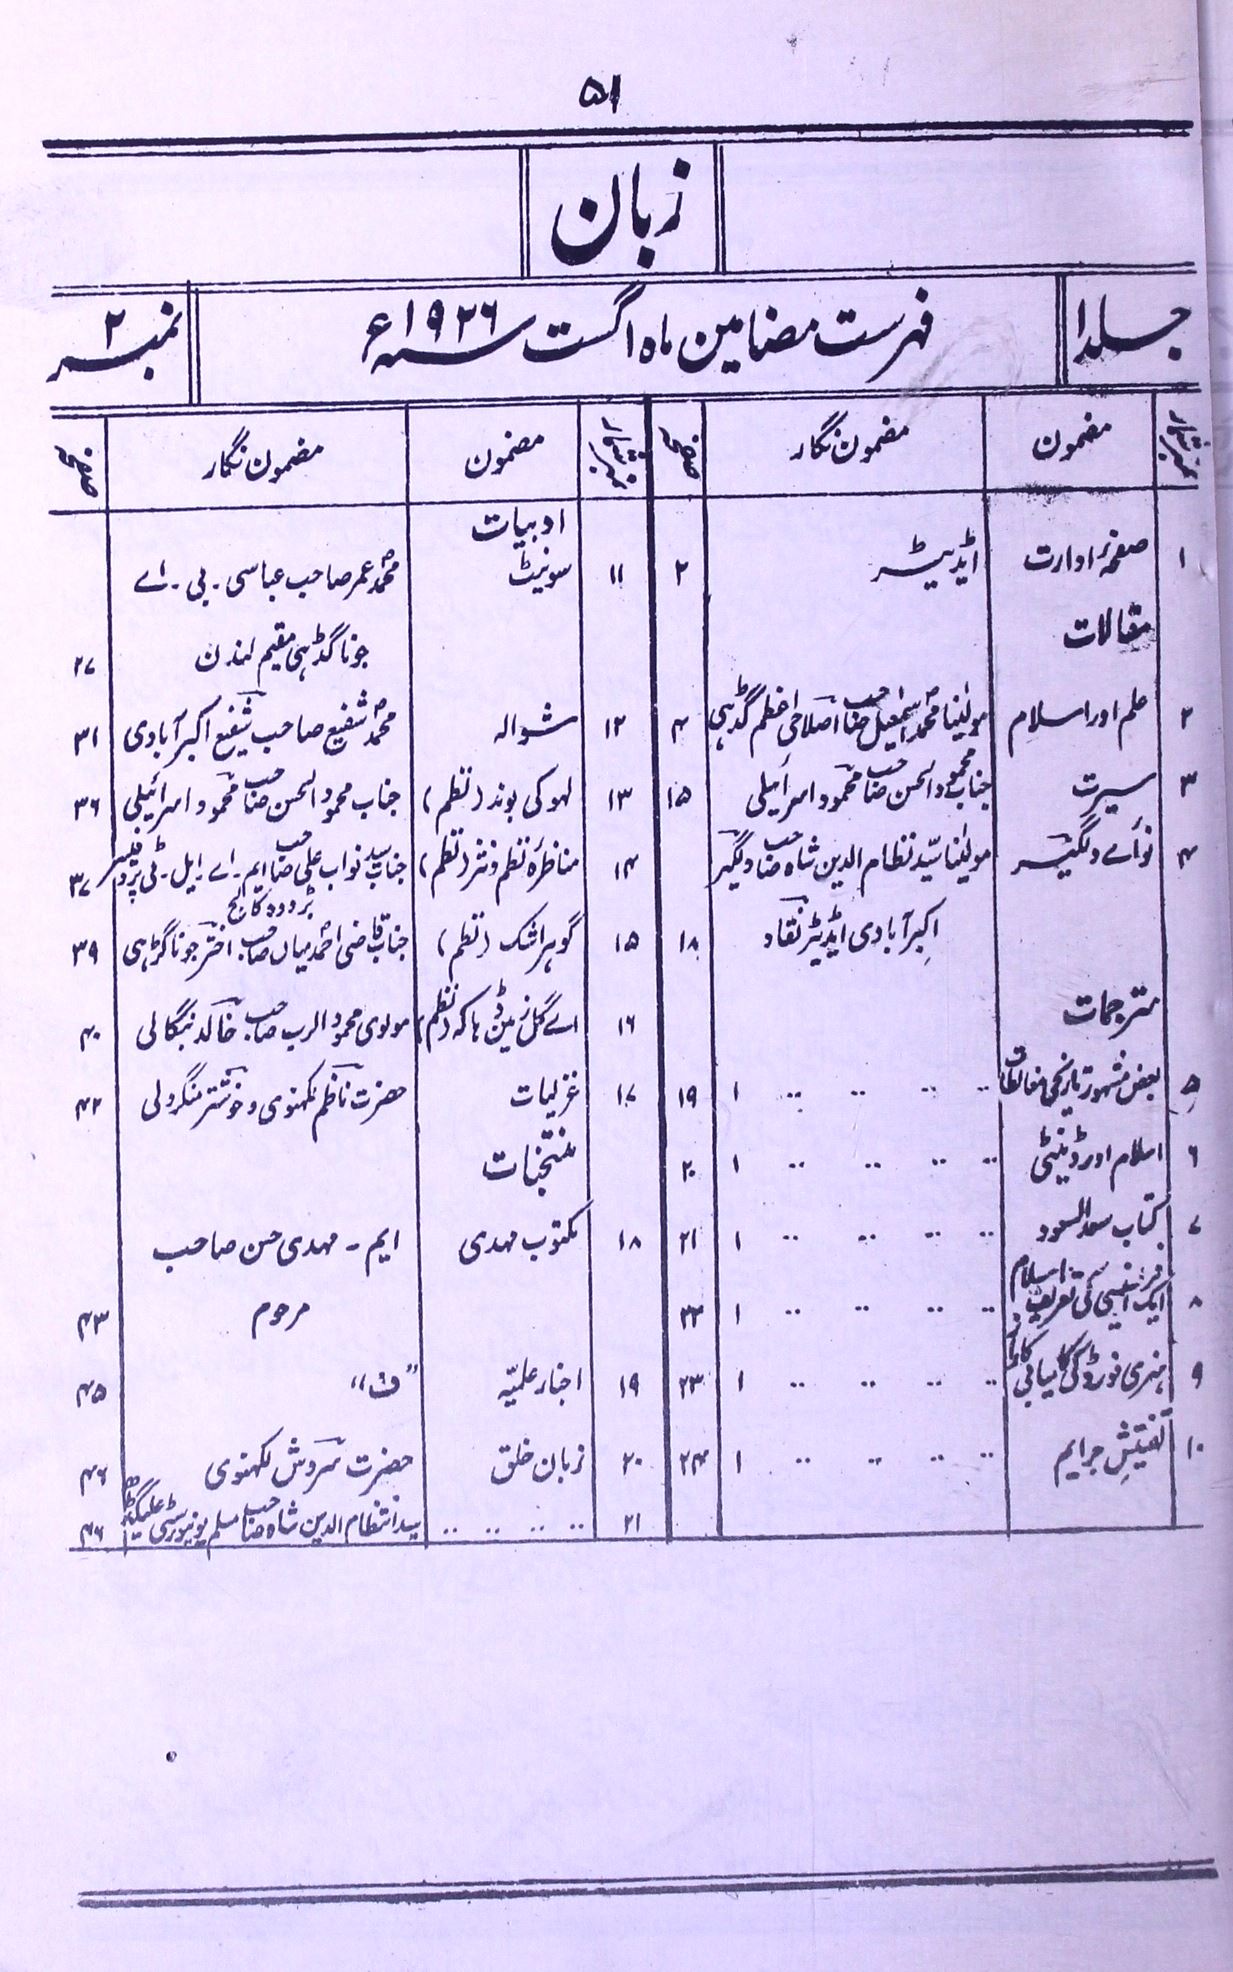 Zaban Jild 1 No. 2 Aug. 1926-Shumara Number-002